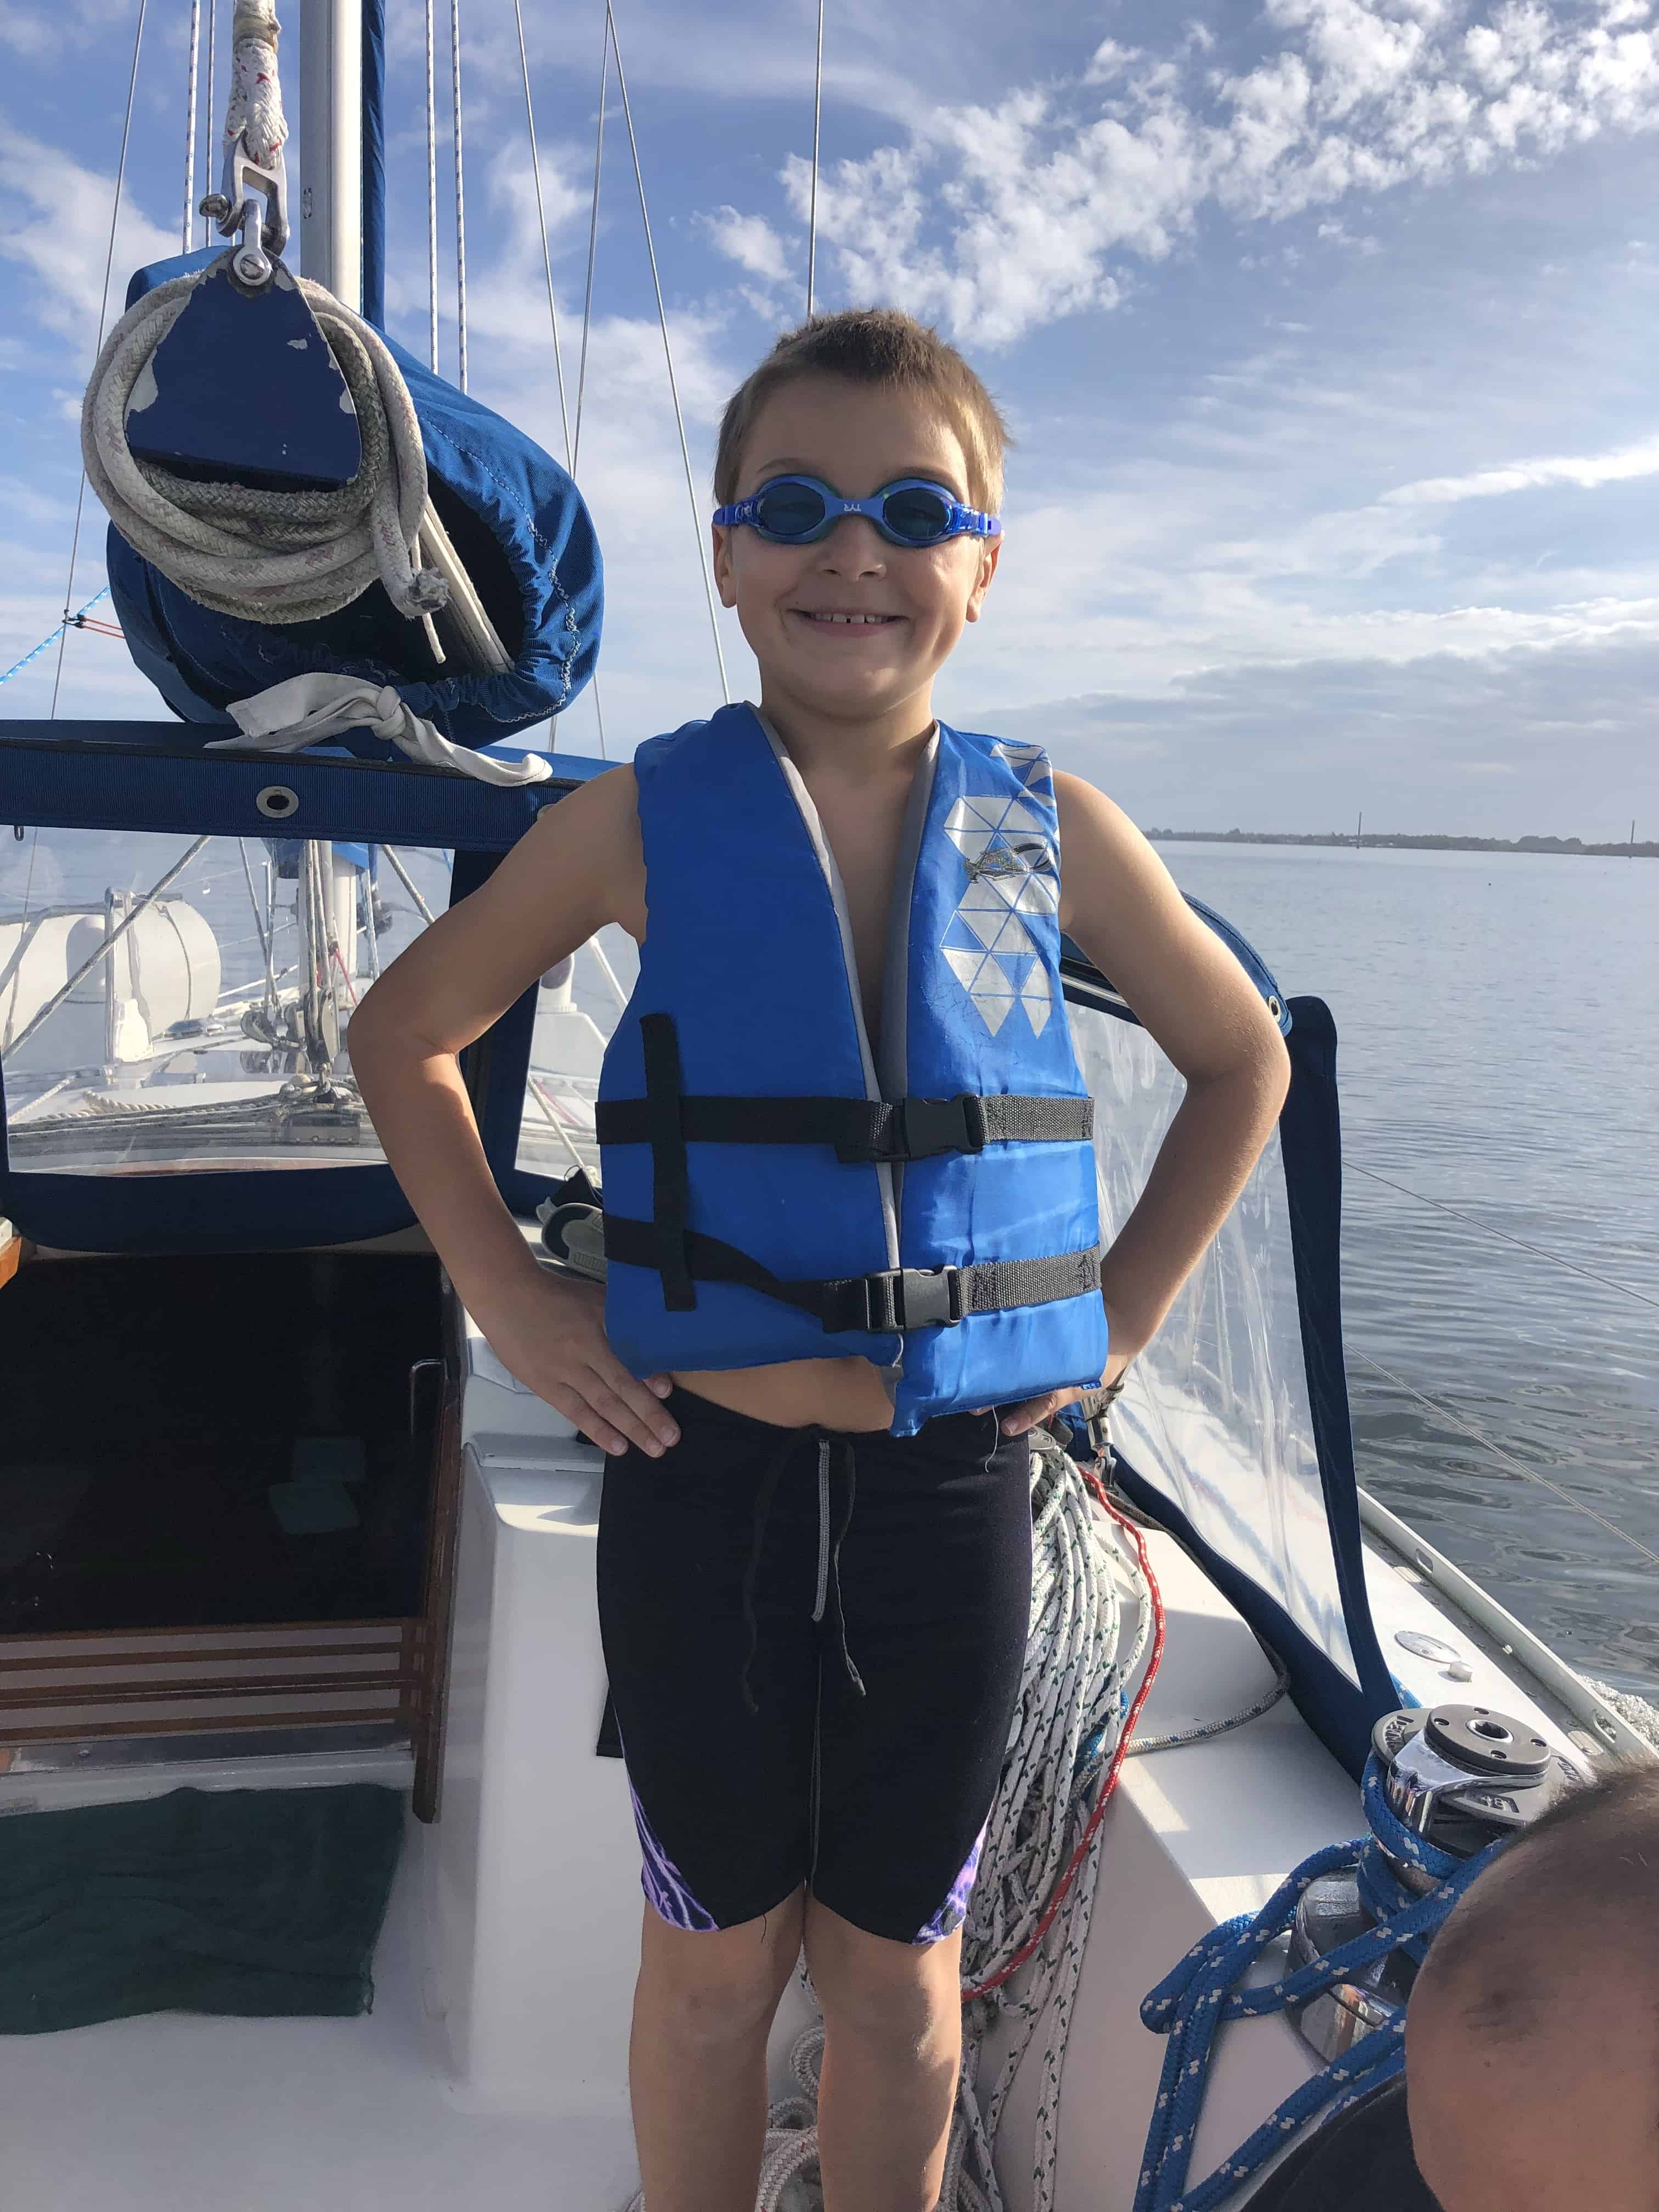 a boy on a sailboat wearing a life jacket